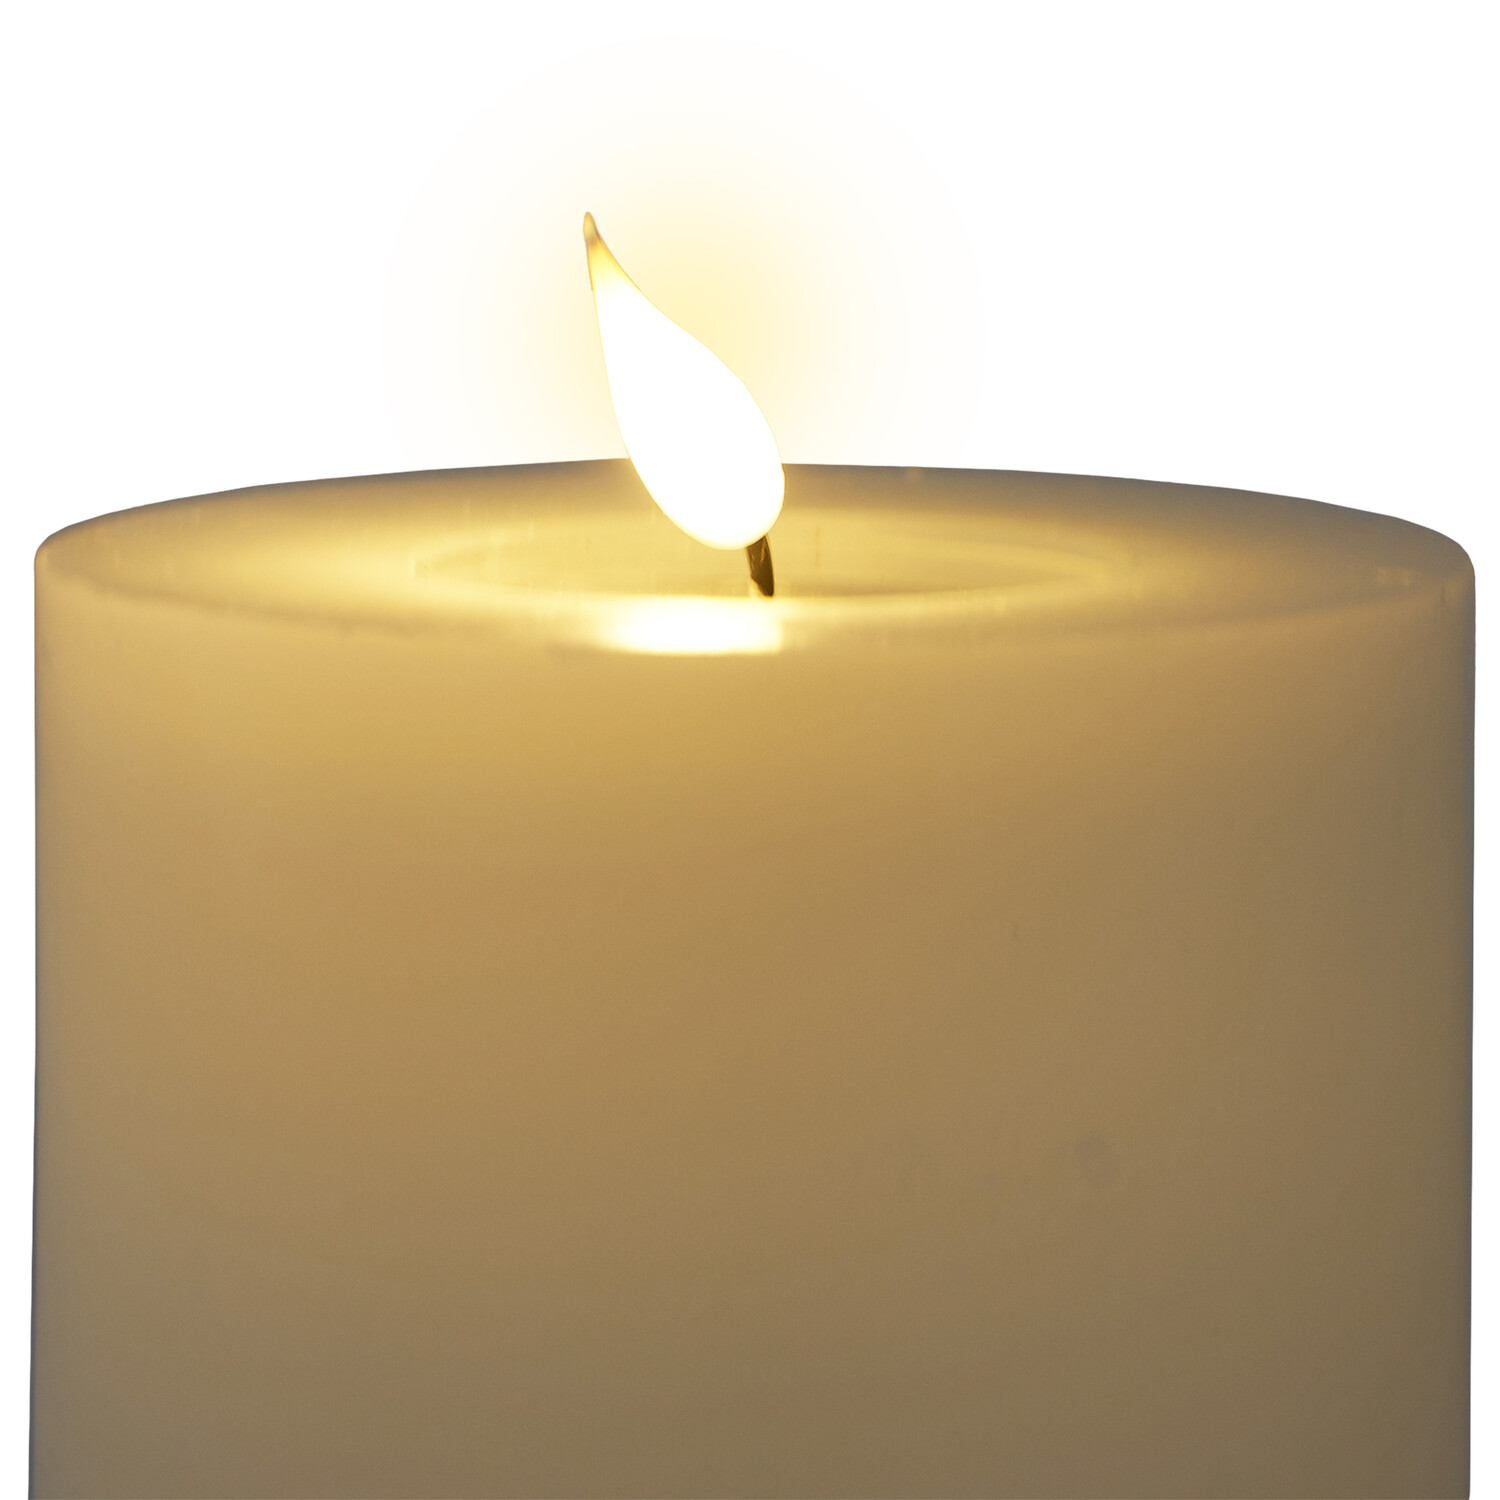 Melted Look LED Candle - White Image 4